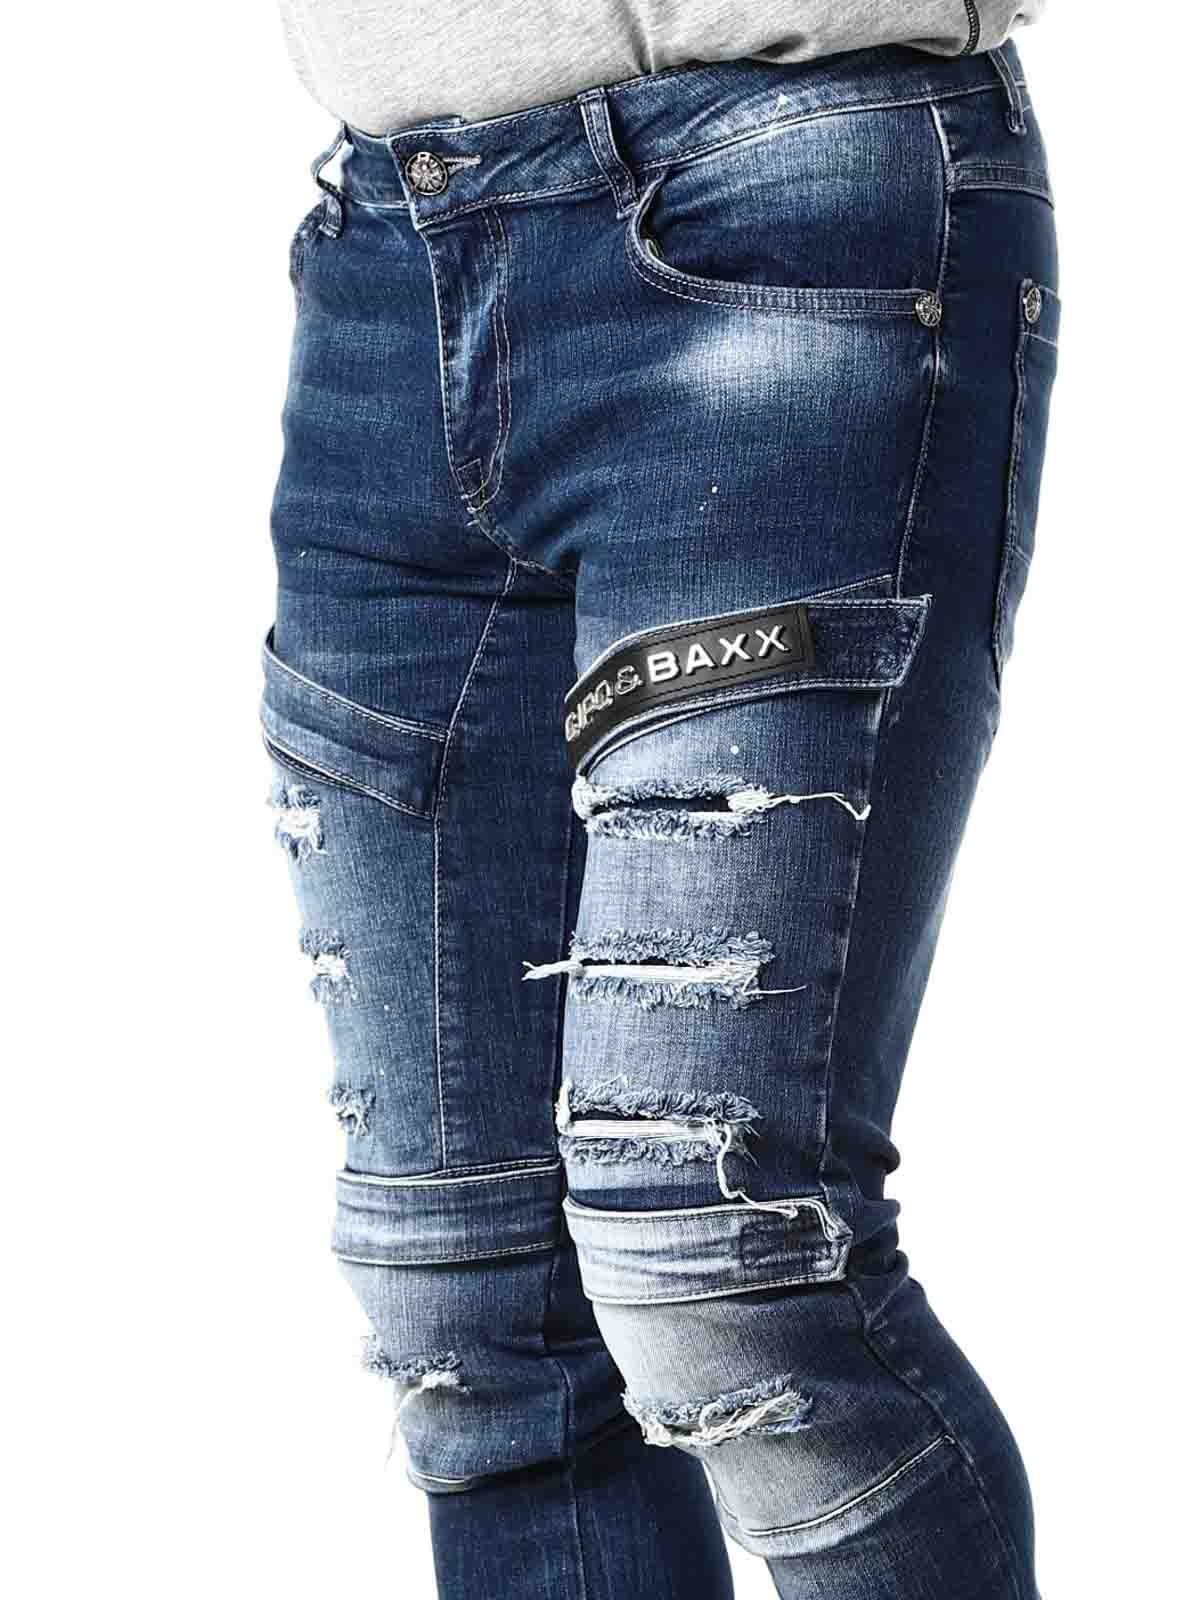 Rockstar Cipo & Baxx Jeans - Blå